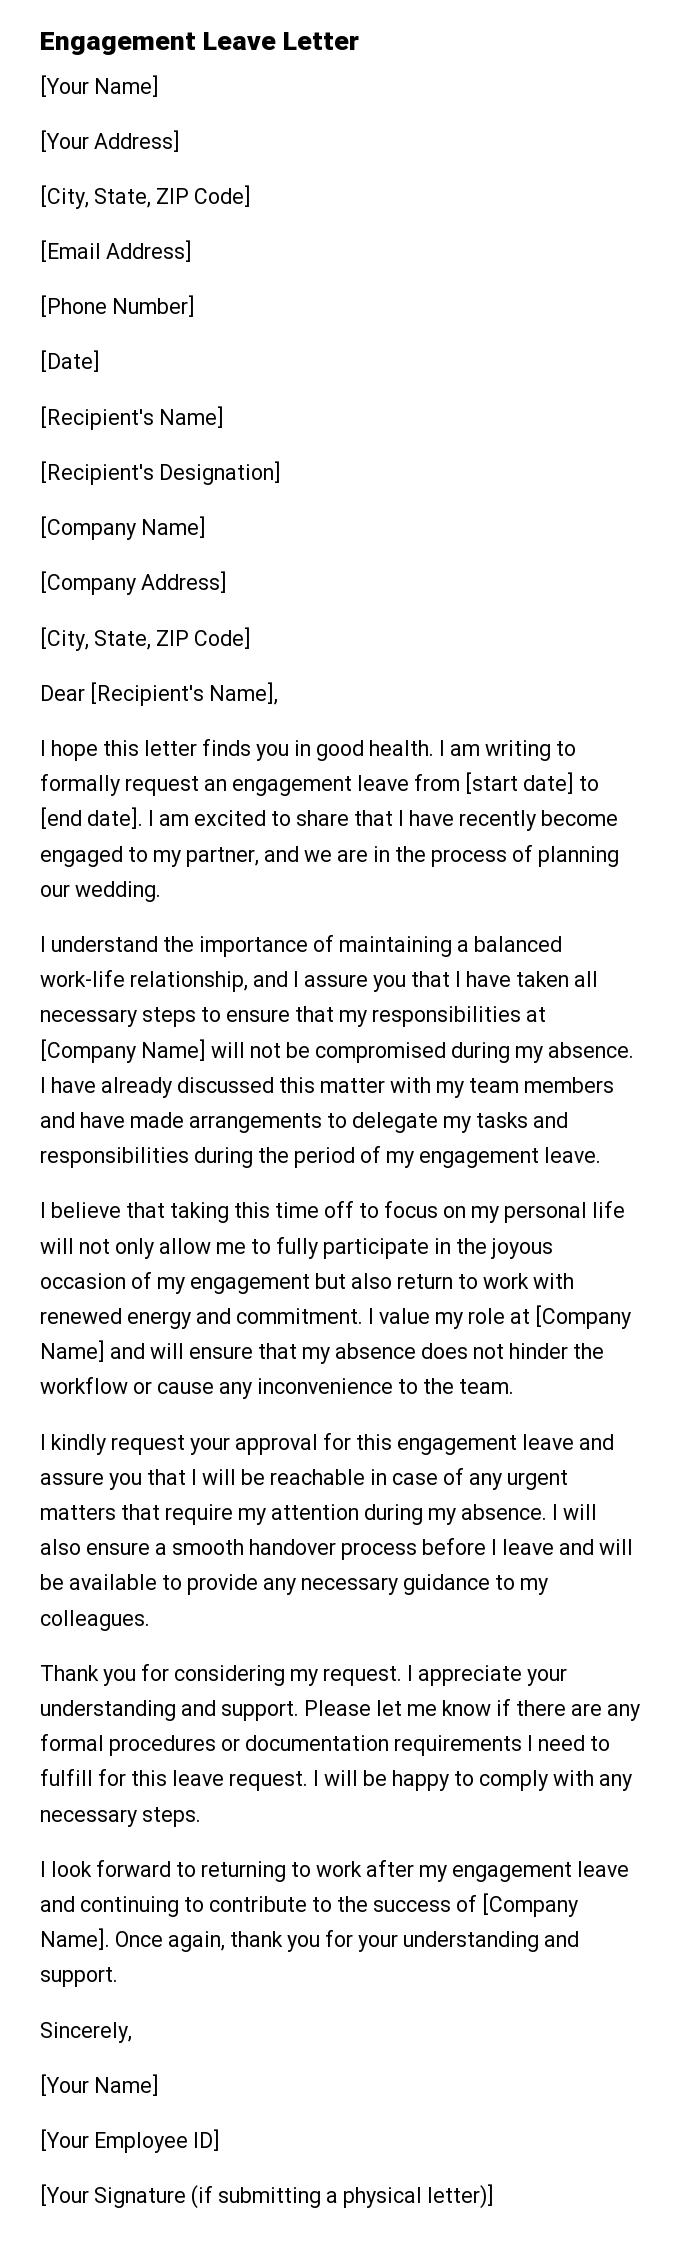 Engagement Leave Letter